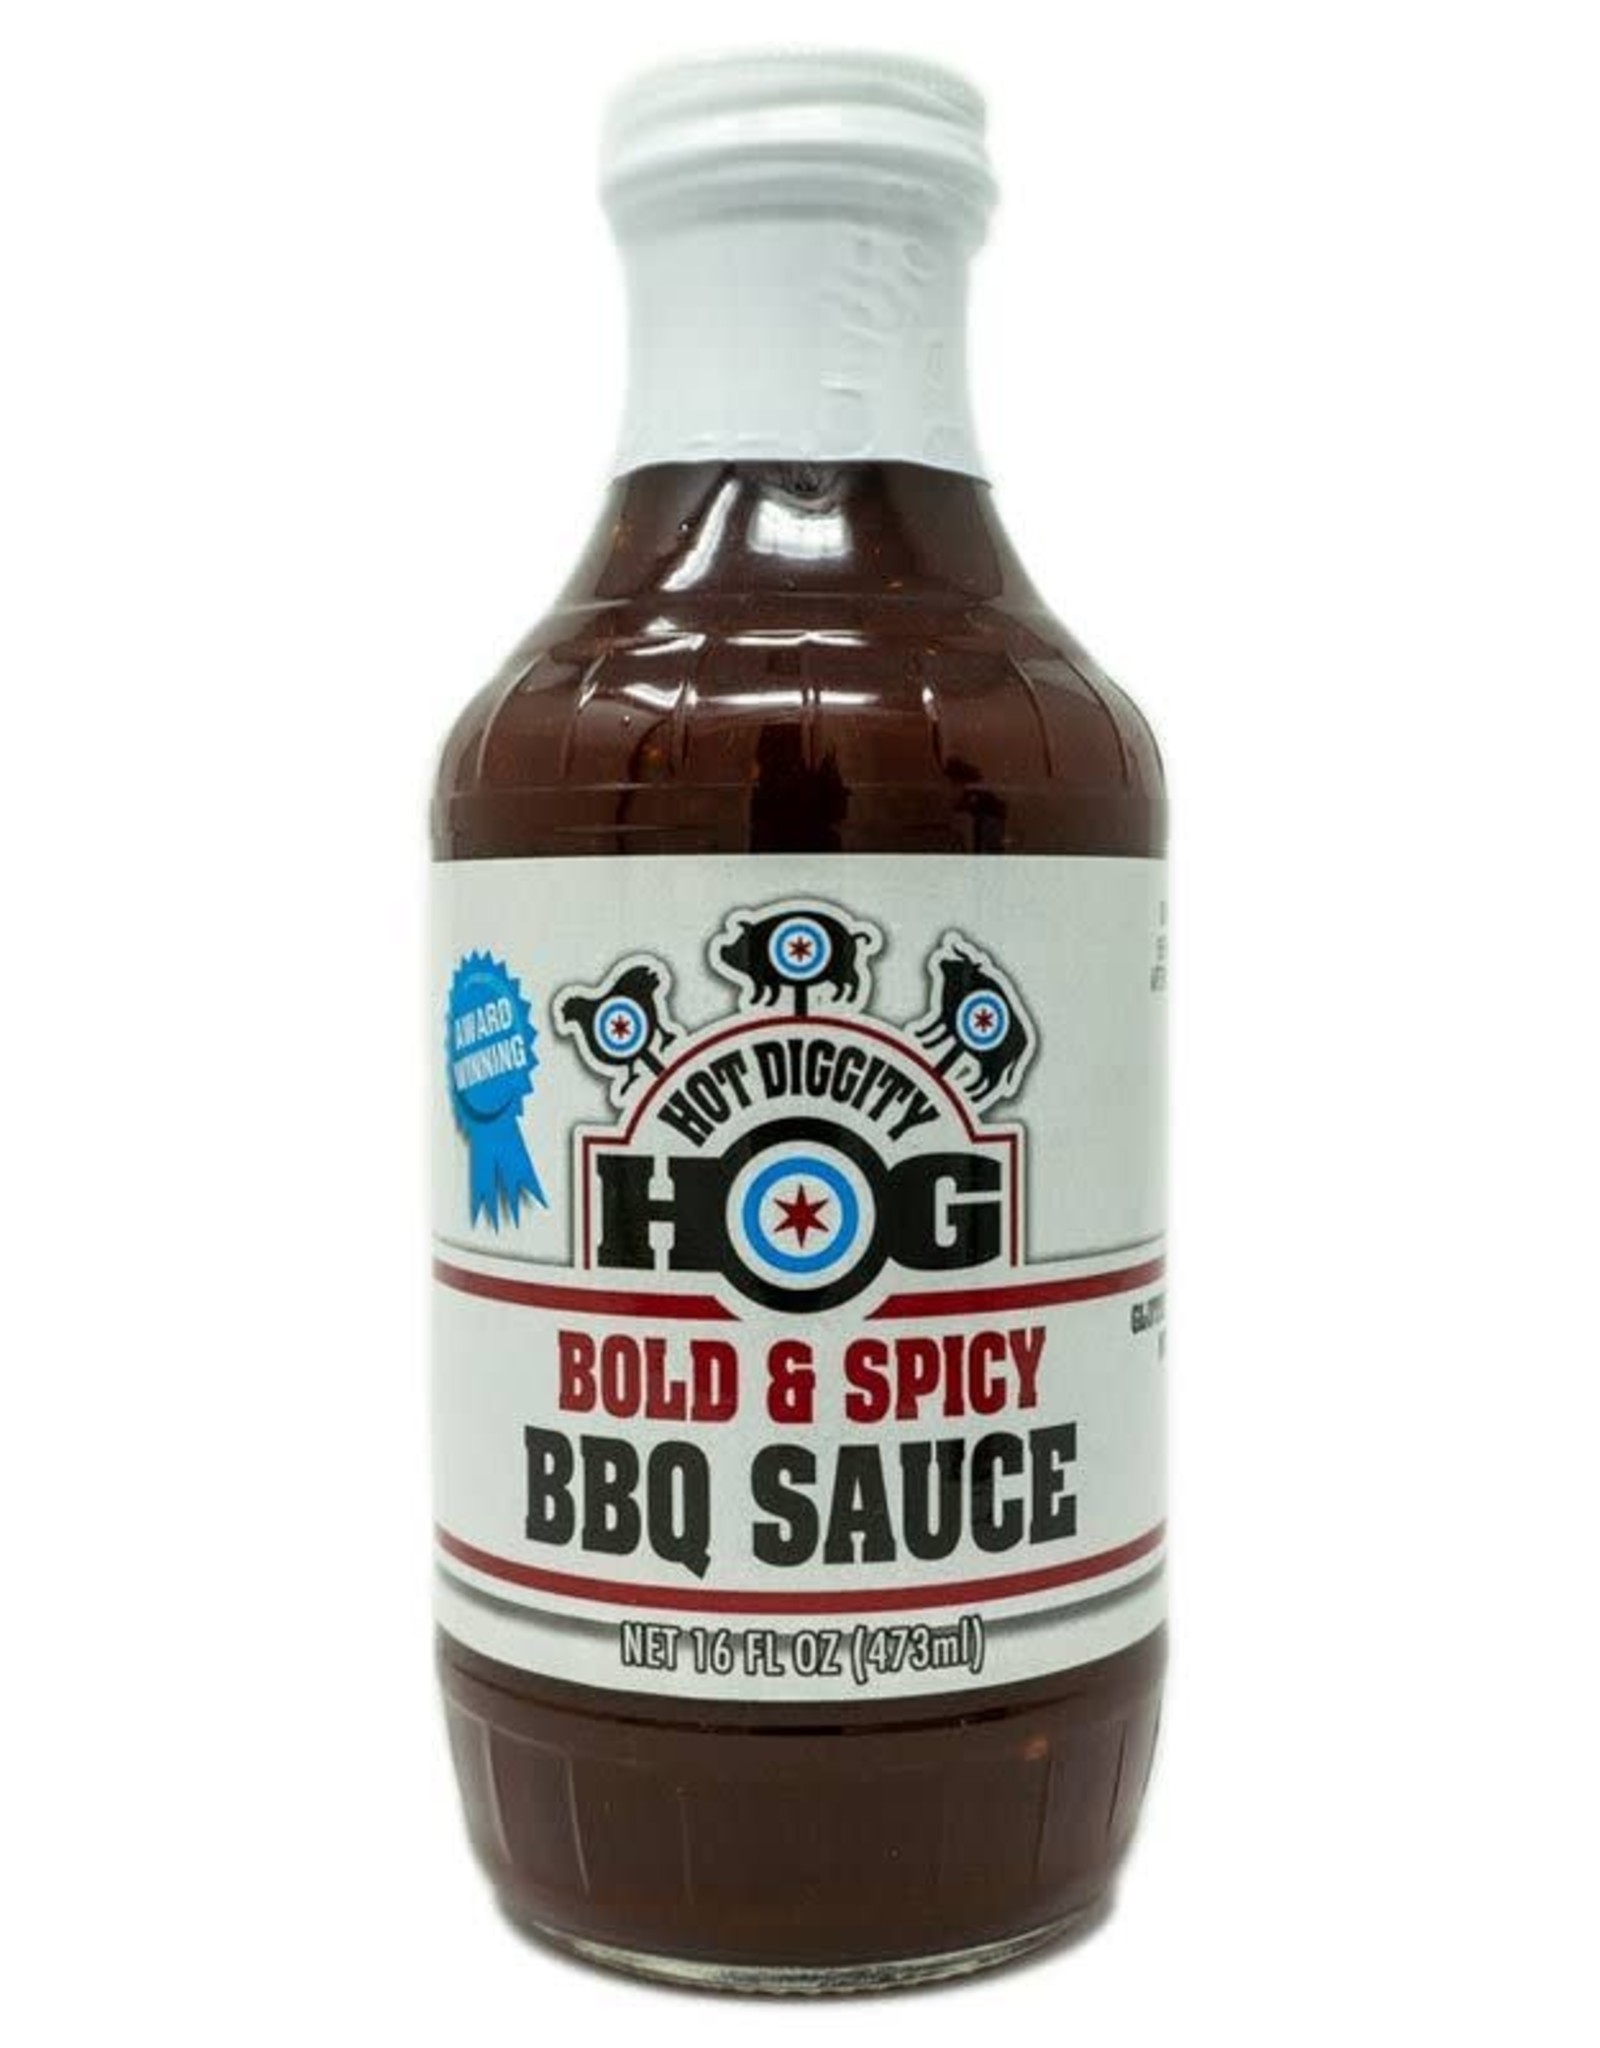 Hot Diggity Hog Bold & Spicy BBQ Sauce, 16oz.